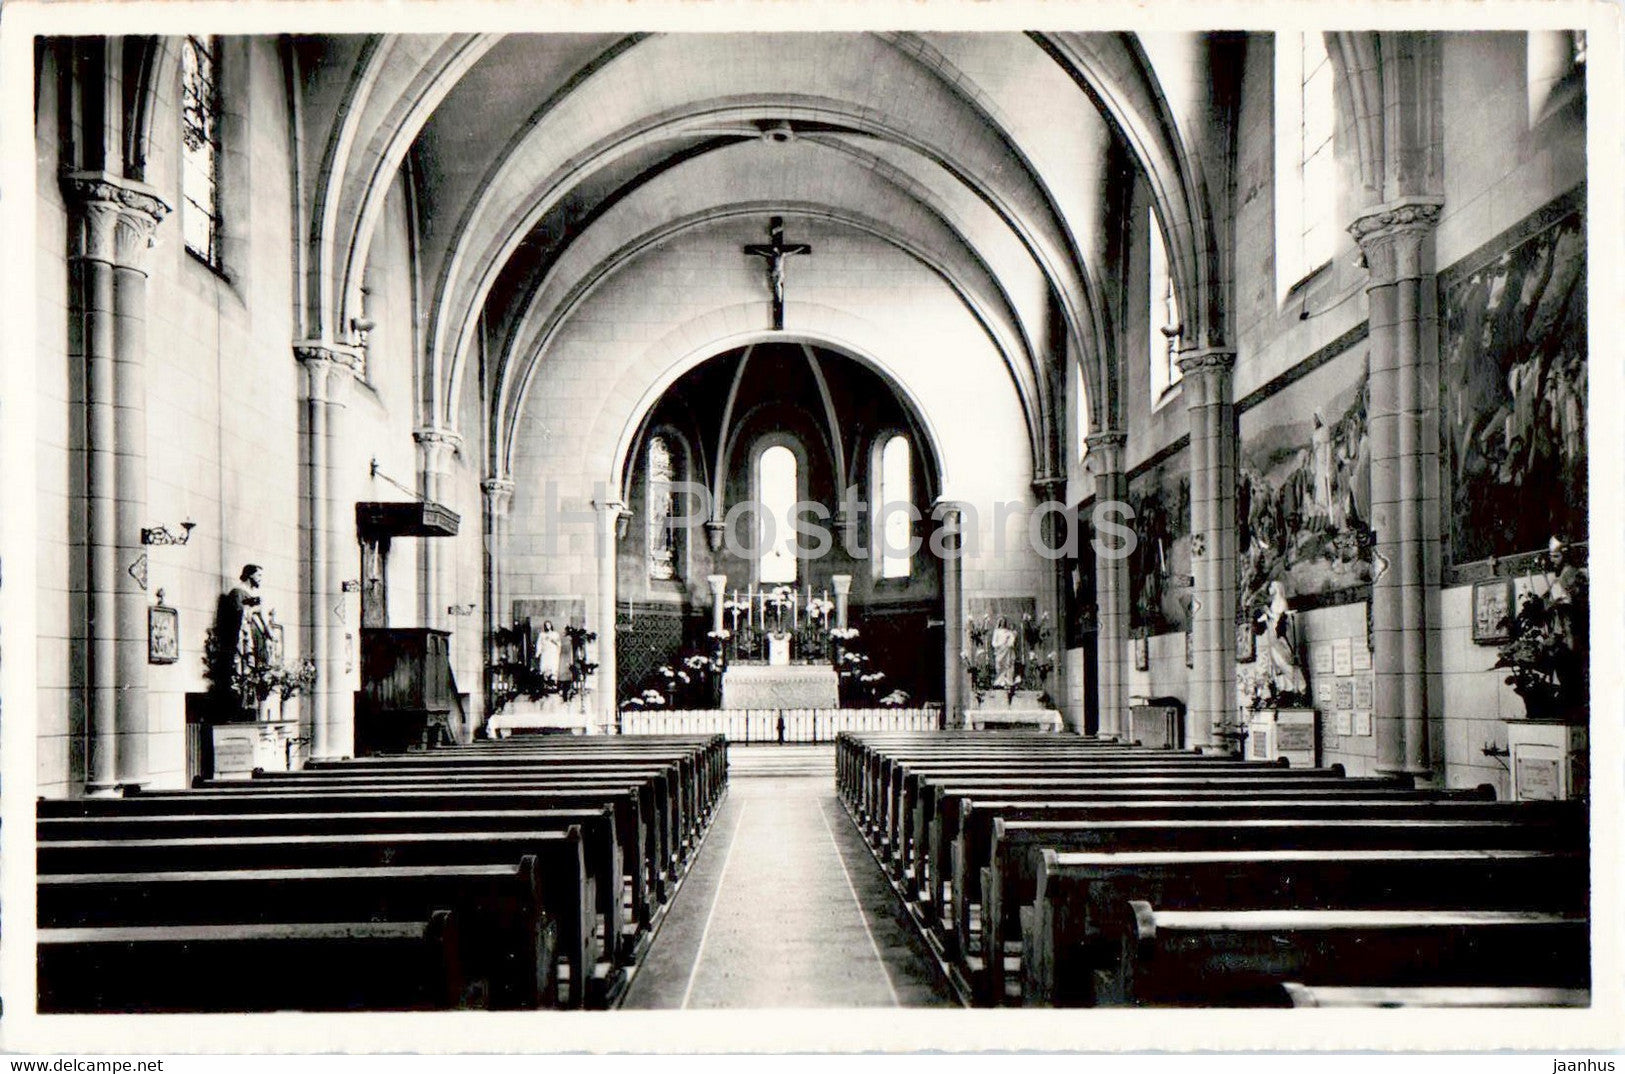 Leysin - Eglise catholique - church - 89 - old postcard - Switzerland - unused - JH Postcards